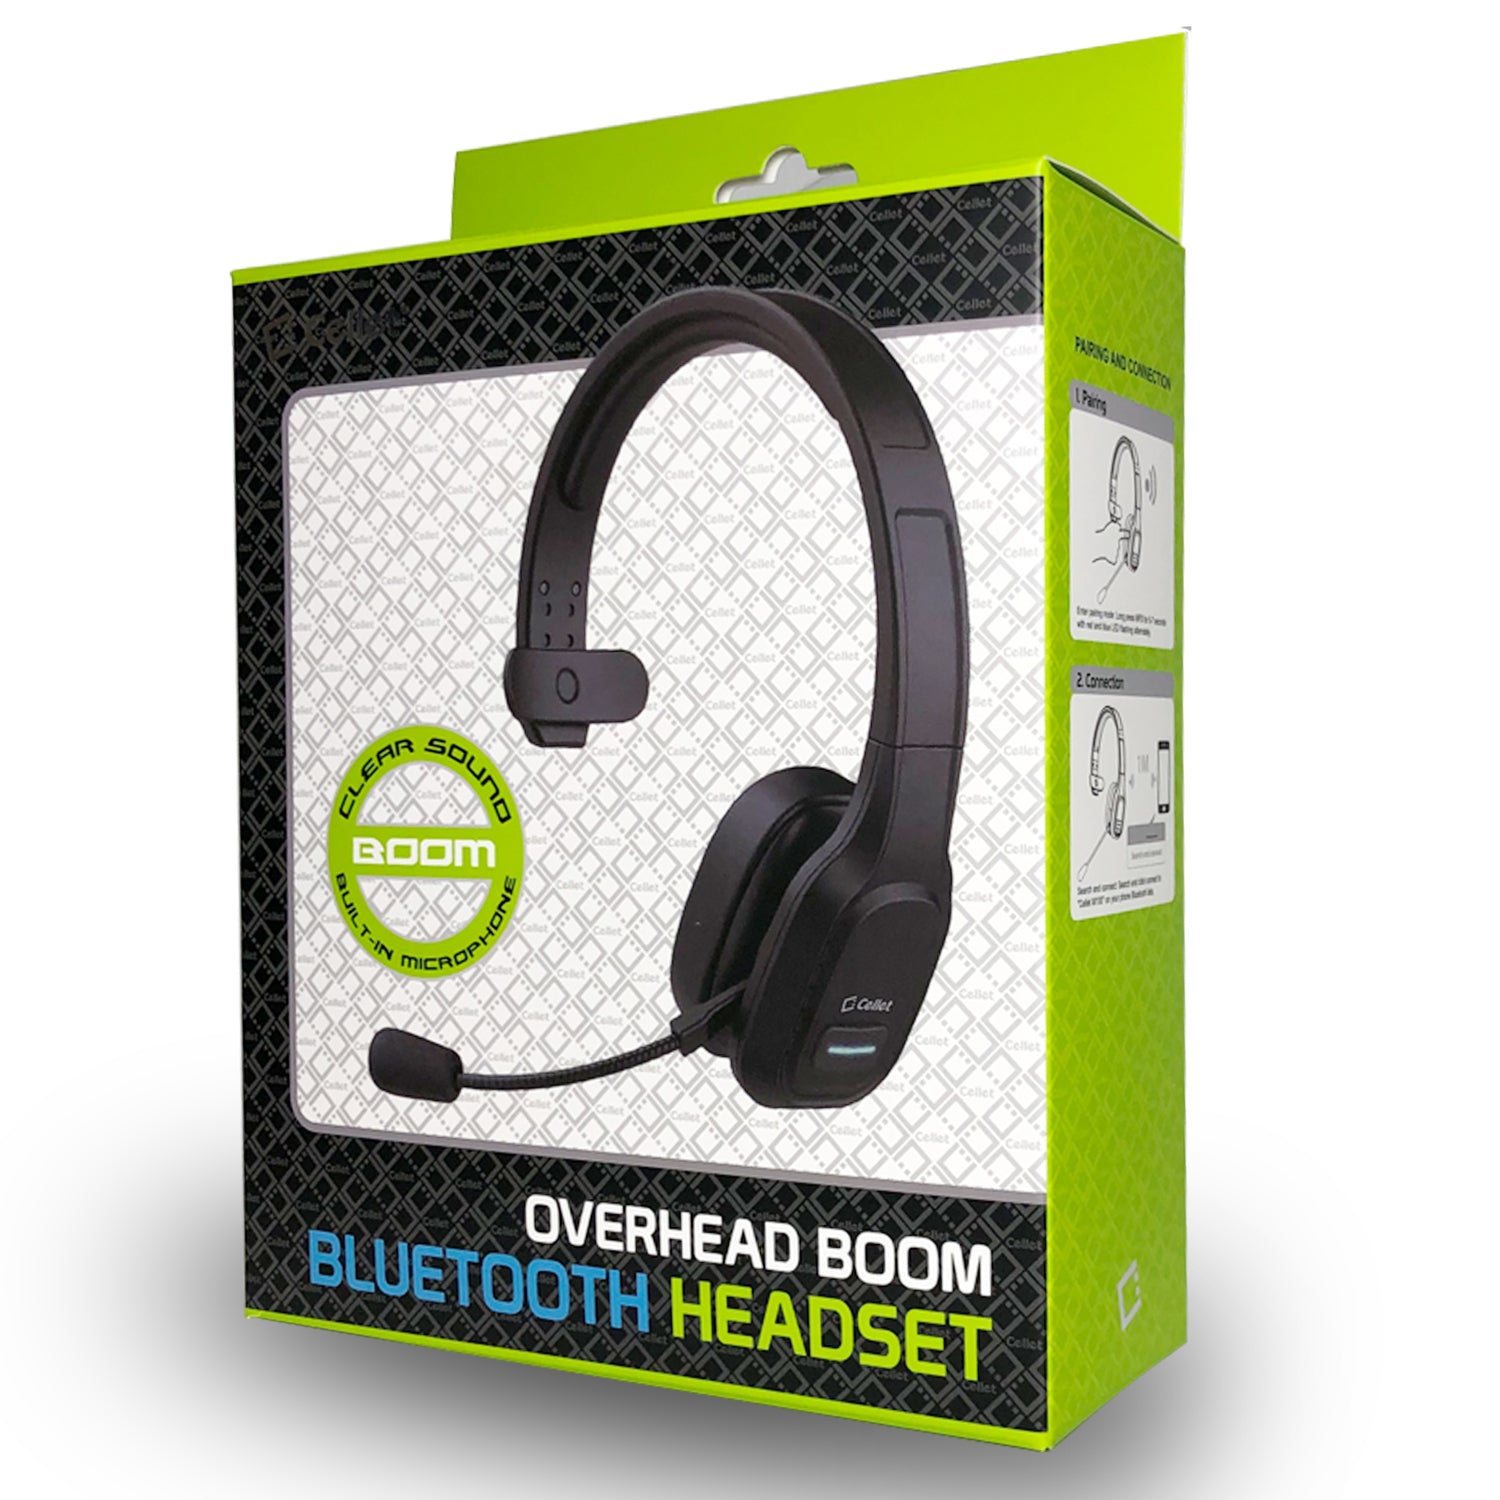 EBBOOMM100 - Overhead Wireless Mono Headset, Bluetooth V5.0 with